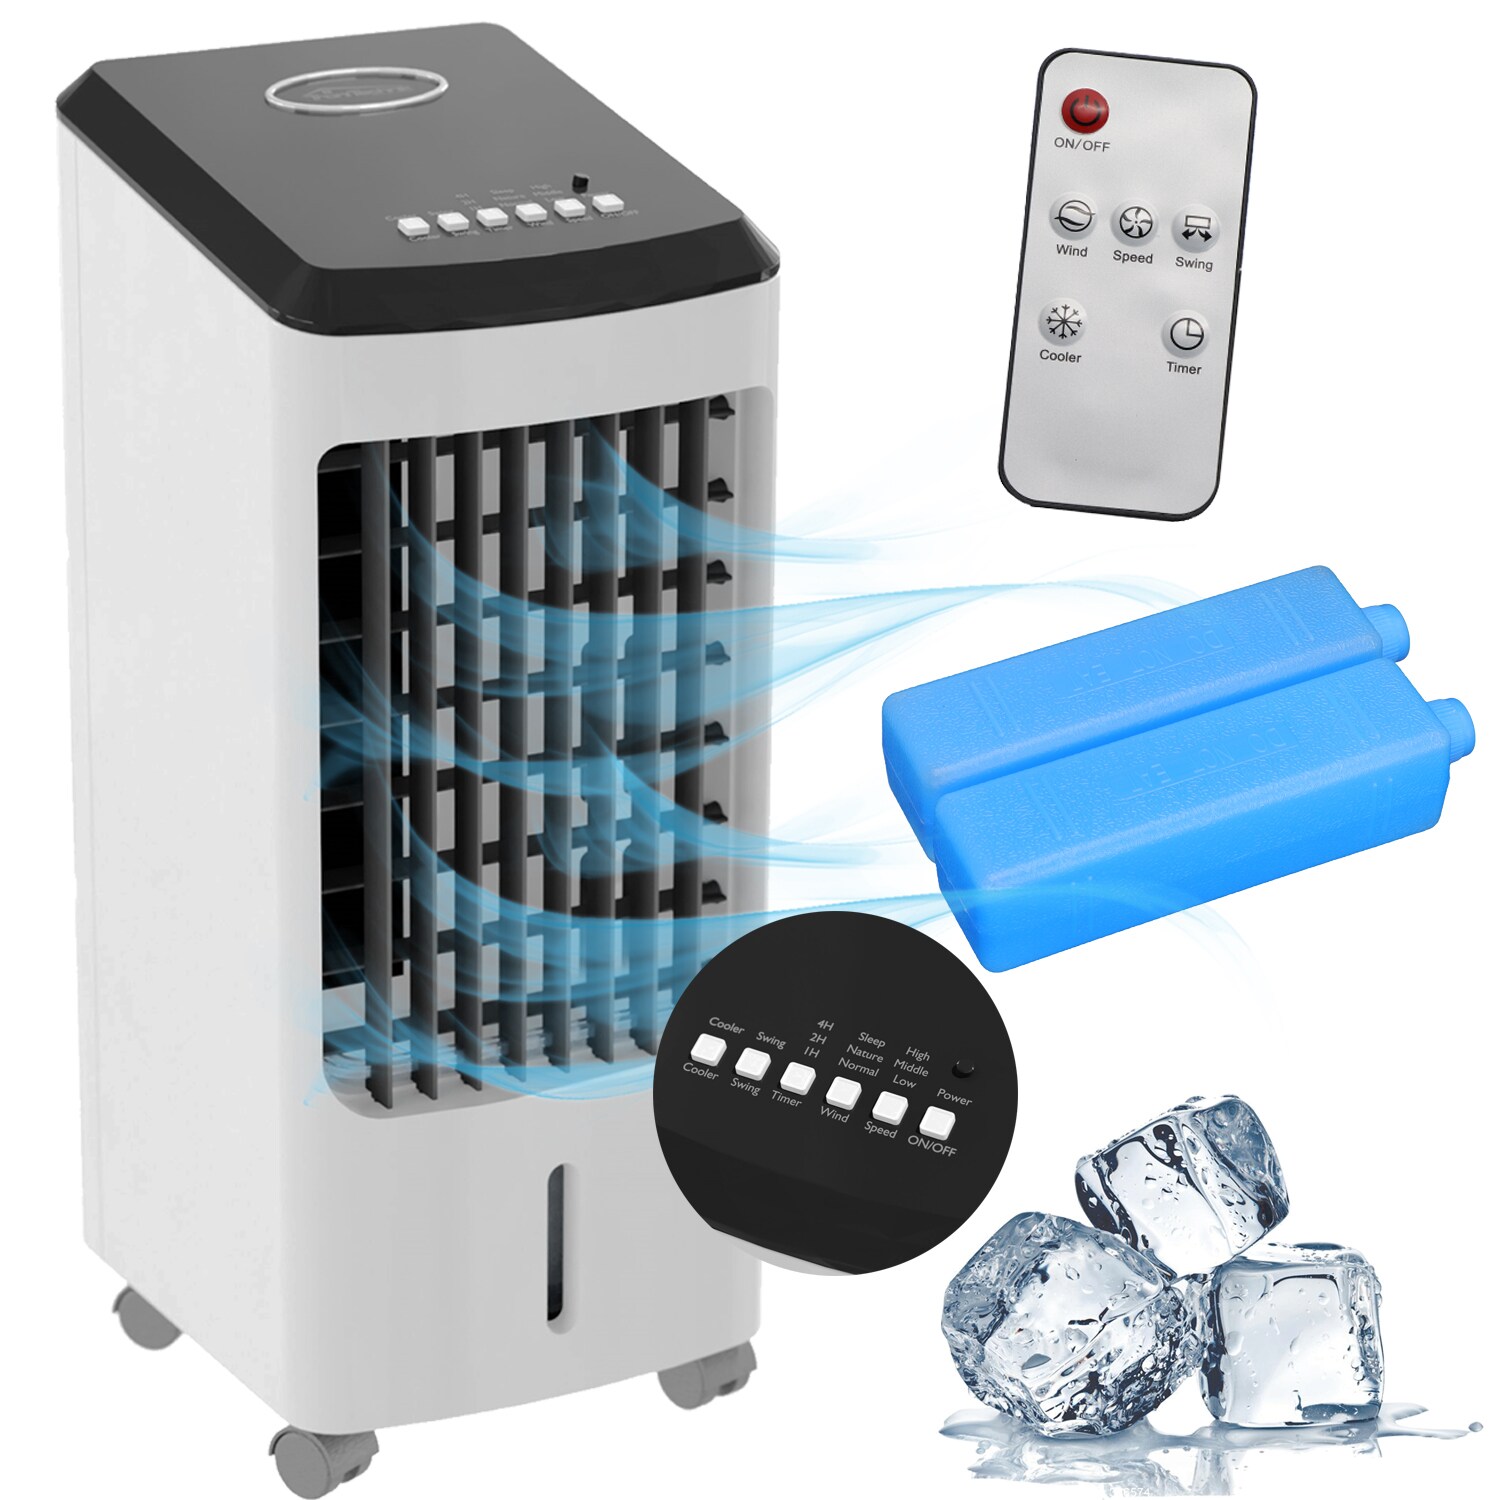 TroniTechnik Mobiles Klimagerät 4in1 Klimaanlage Luftkühler LK03 Ventilator, inkl. Fernbedienung und Filter